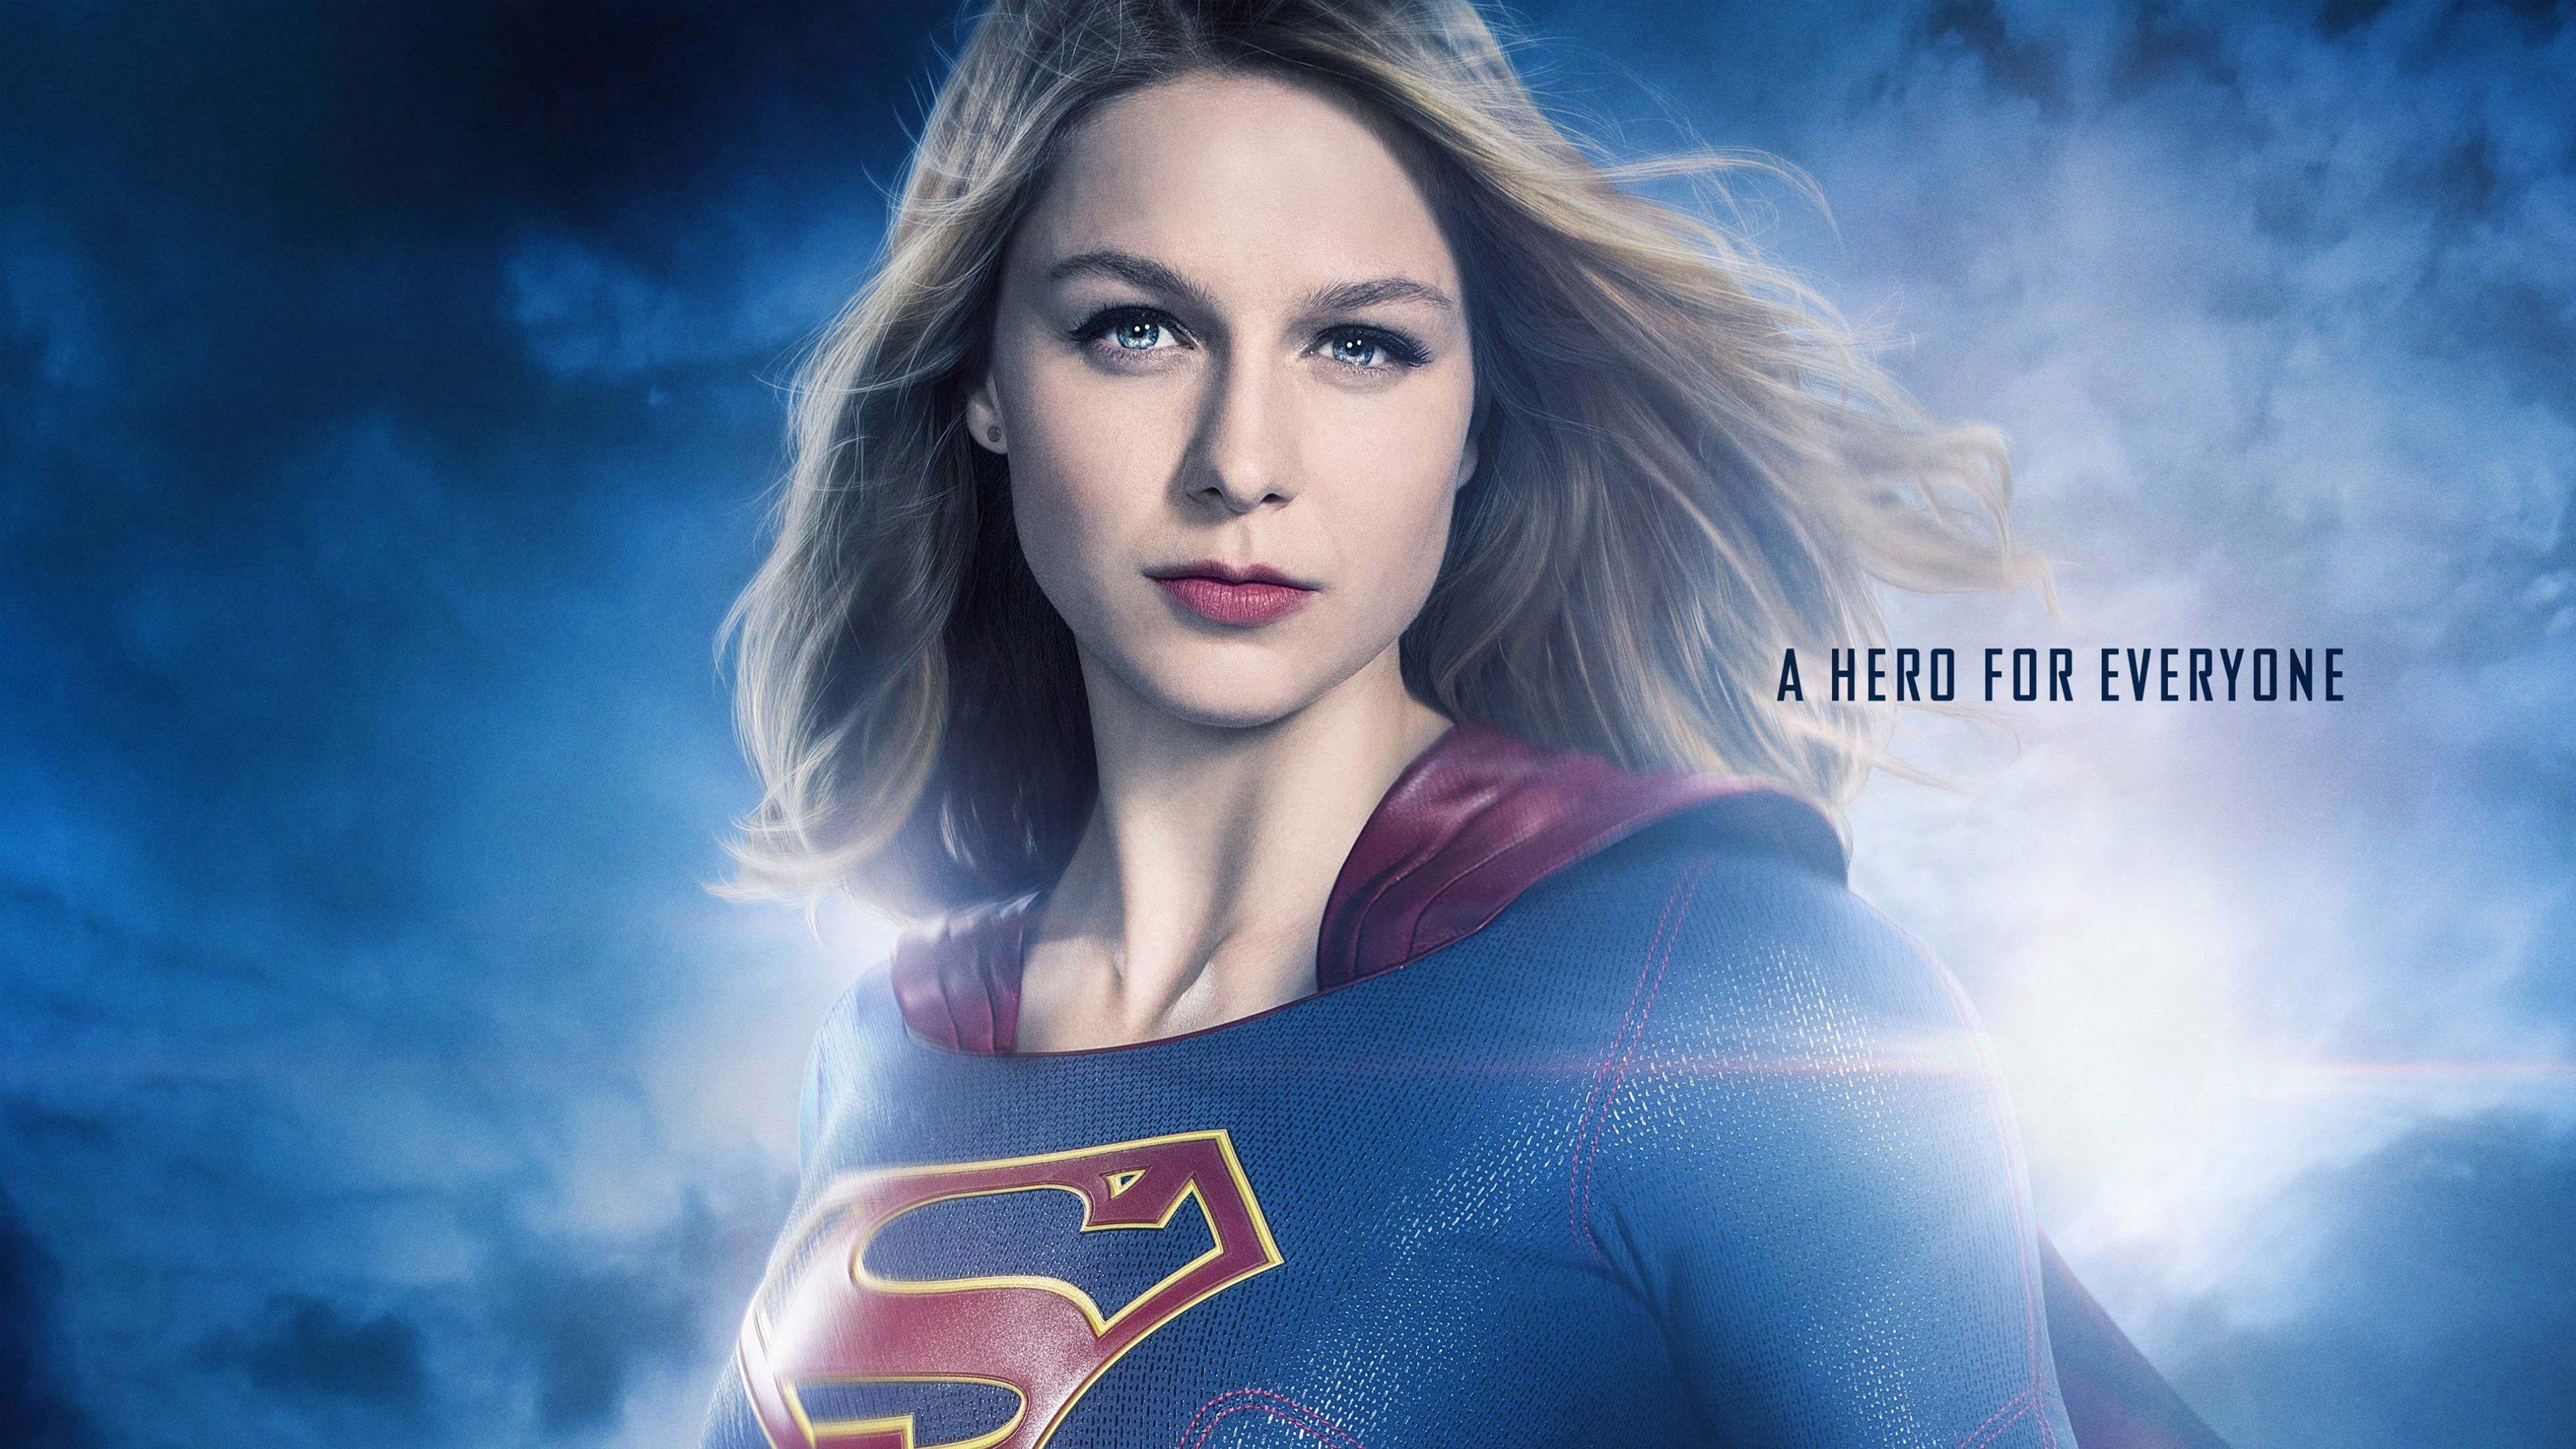 Wallpaper Supergirl, Melissa Benoist, 4K, TV Series,. Wallpaper for iPhone, Android, Mobile and Desktop